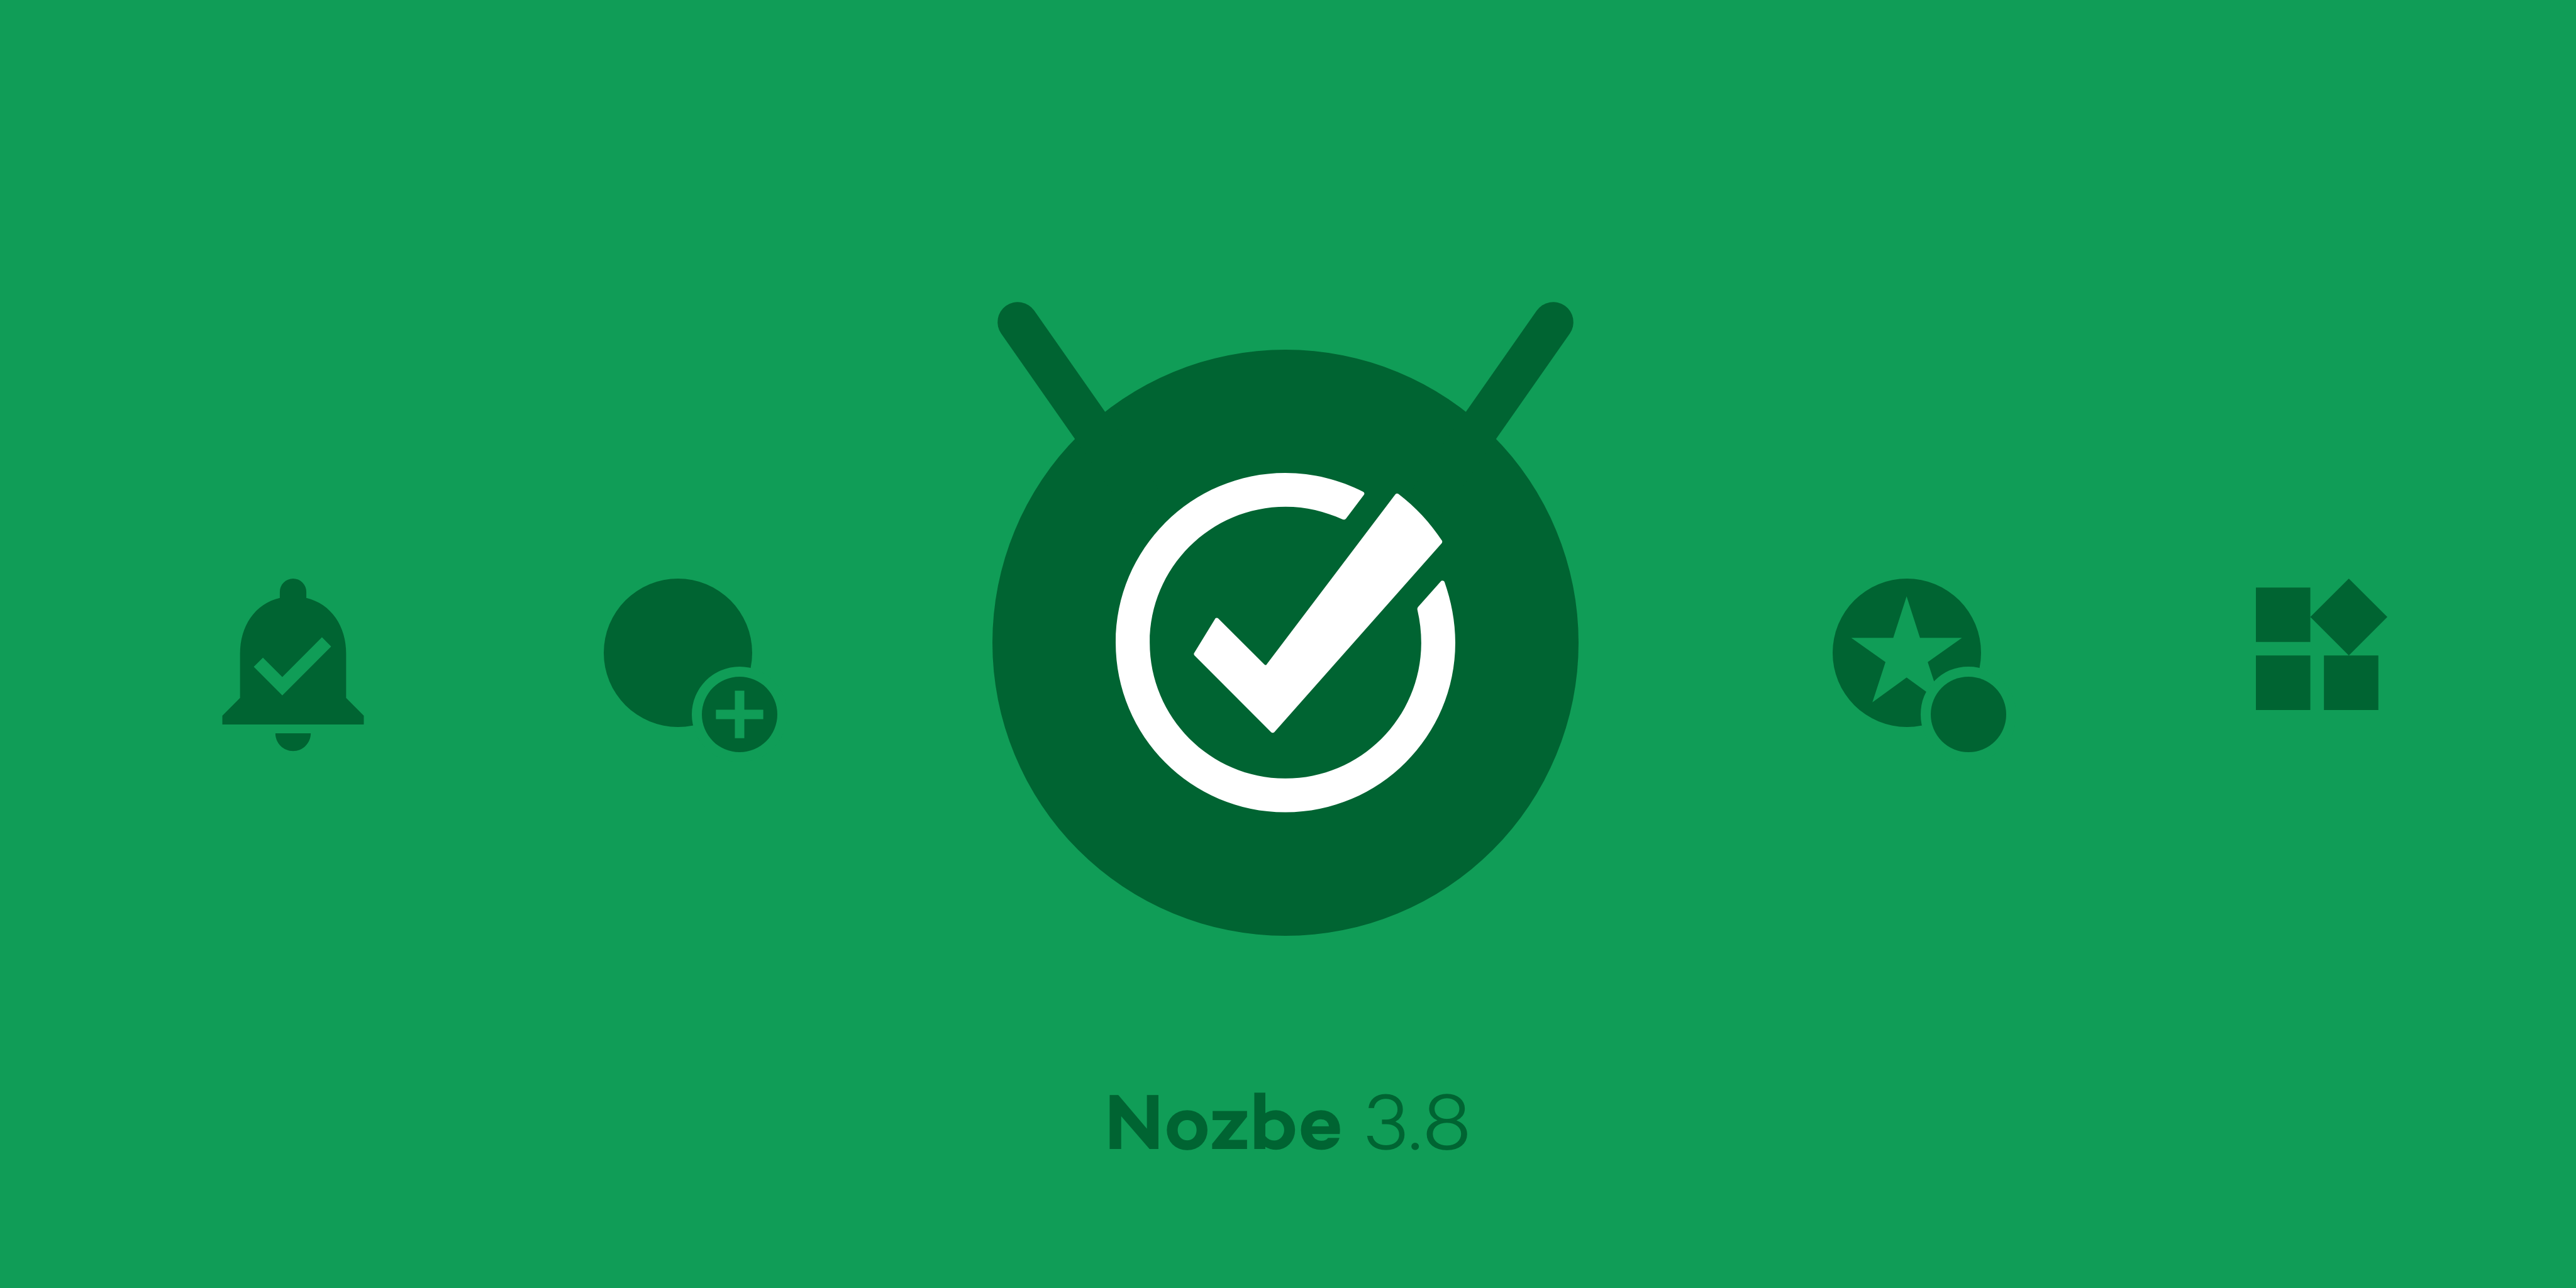 Nowa wersja Nozbe 3.8